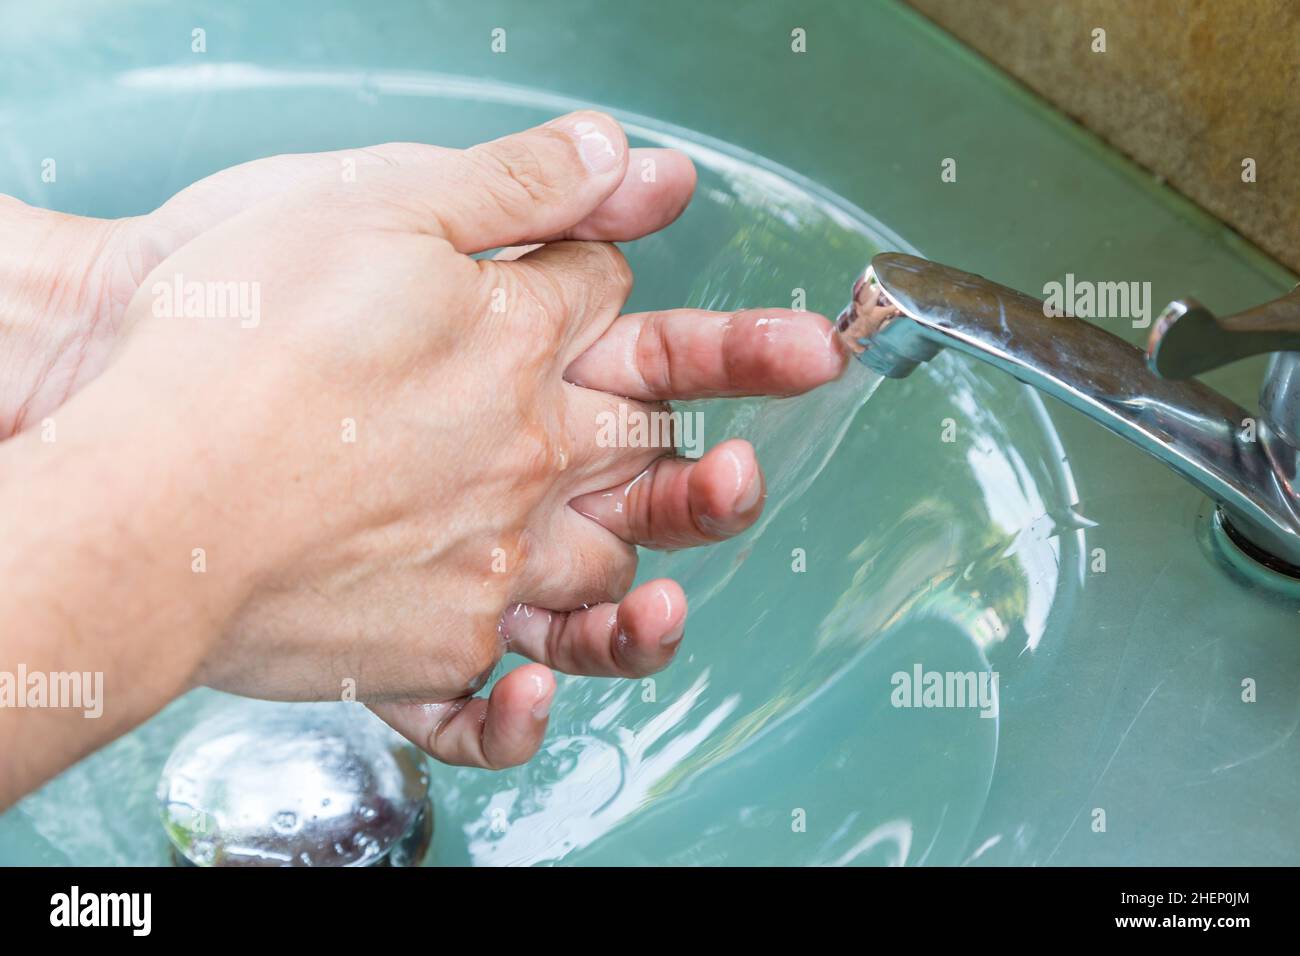 man washing hands before eating Stock Photo